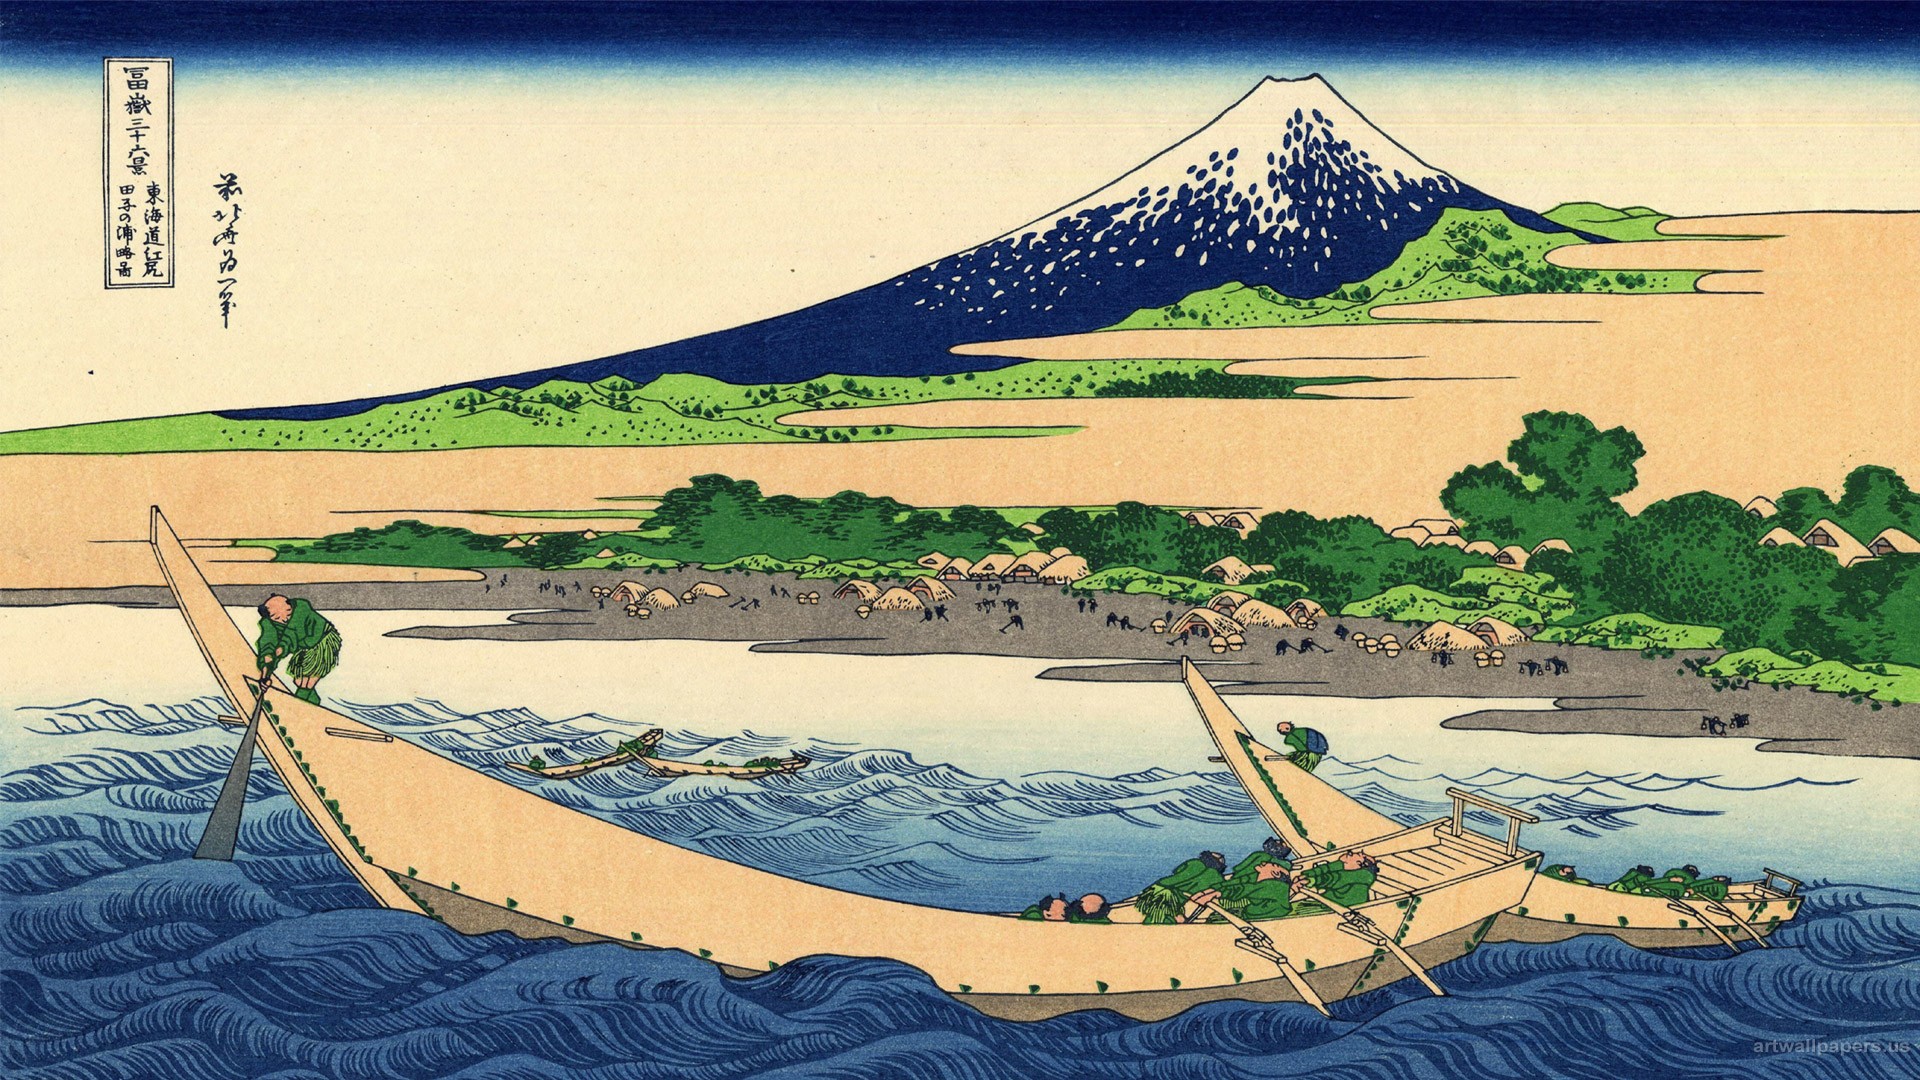 General 1920x1080 Hokusai landscape Wood block